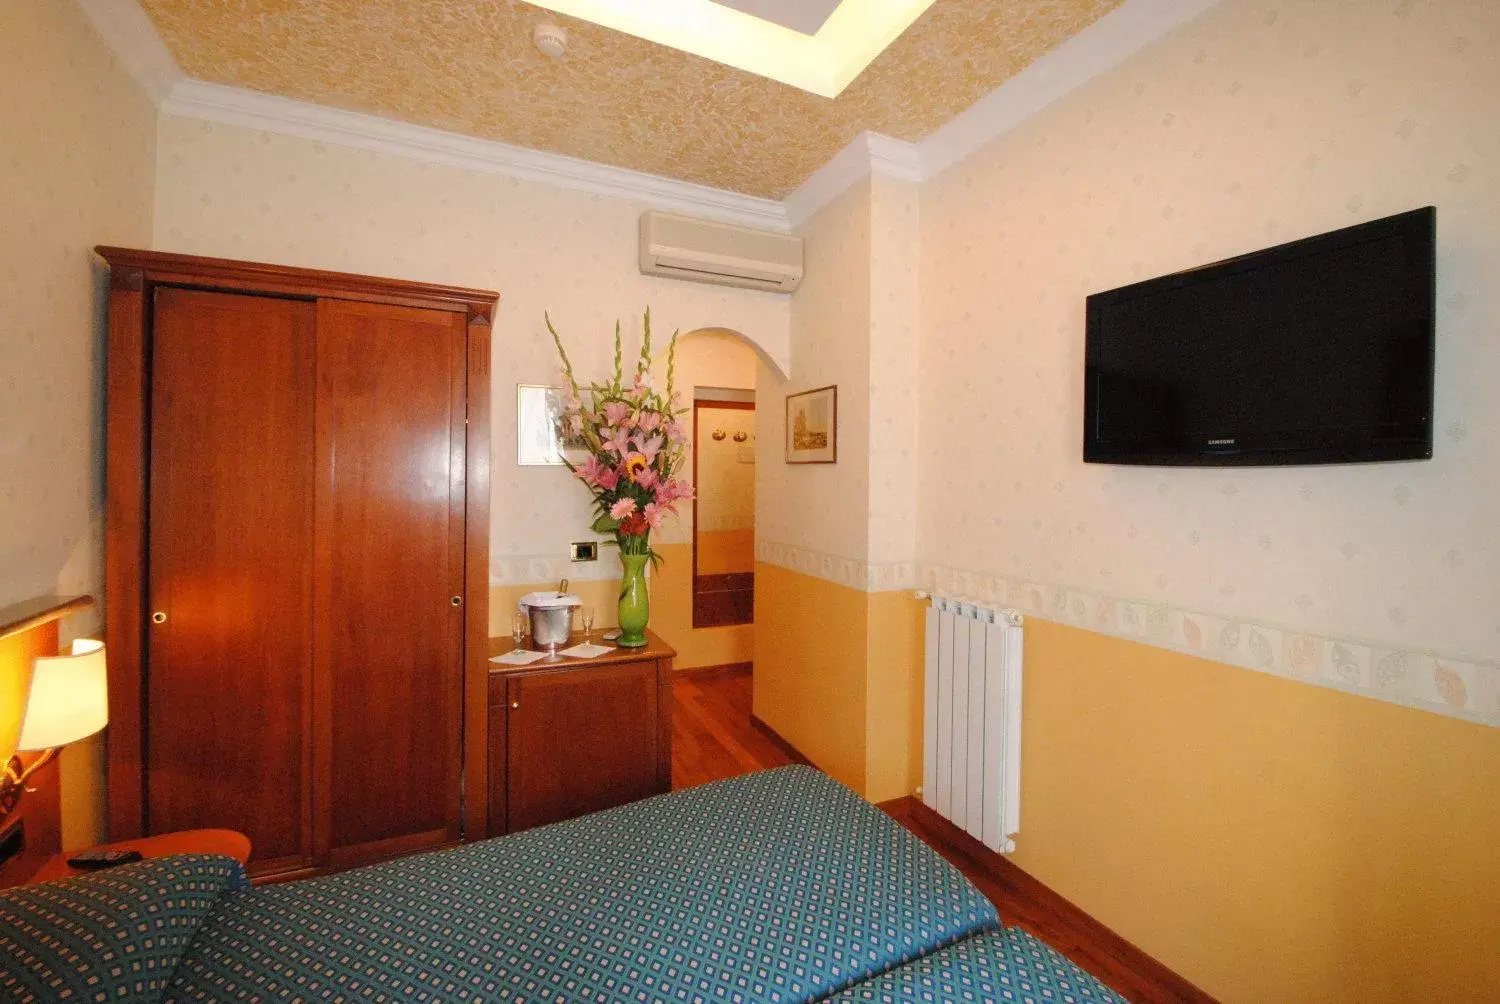 Bedroom, TV/Entertainment Center in Hotel Verona Rome